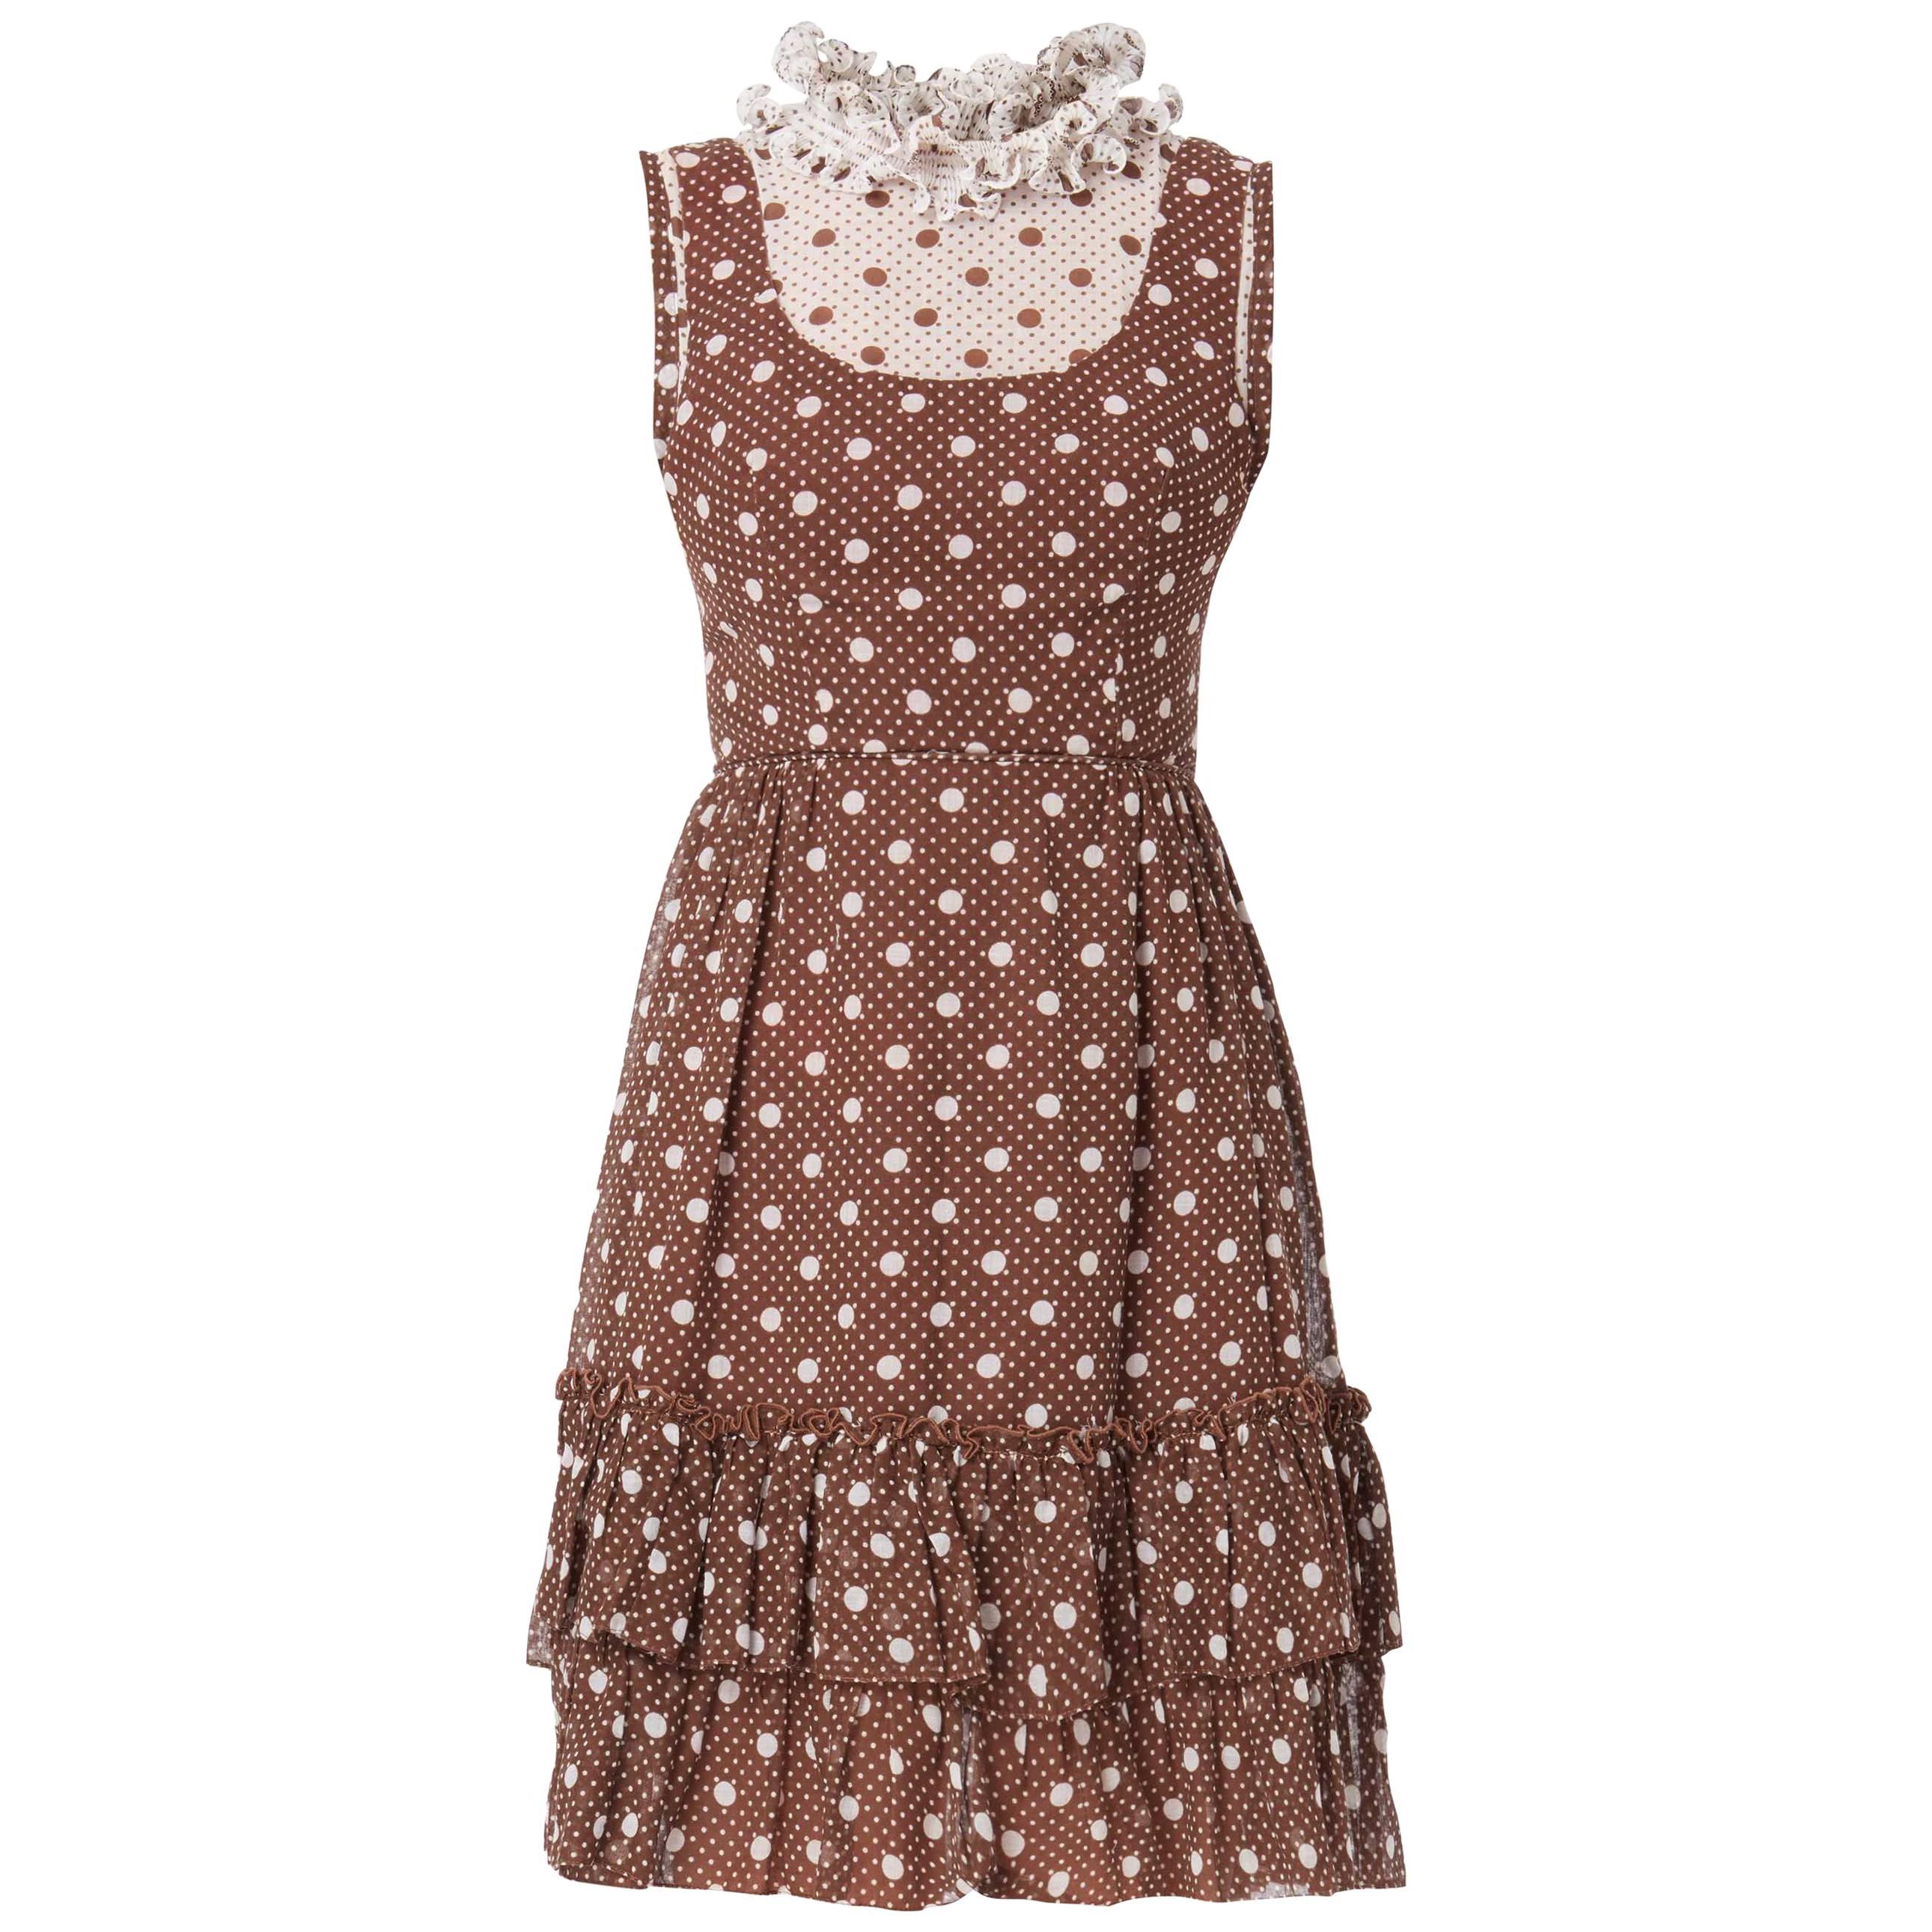 Brown & white polka dot sleeveless dress, circa 1968 For Sale